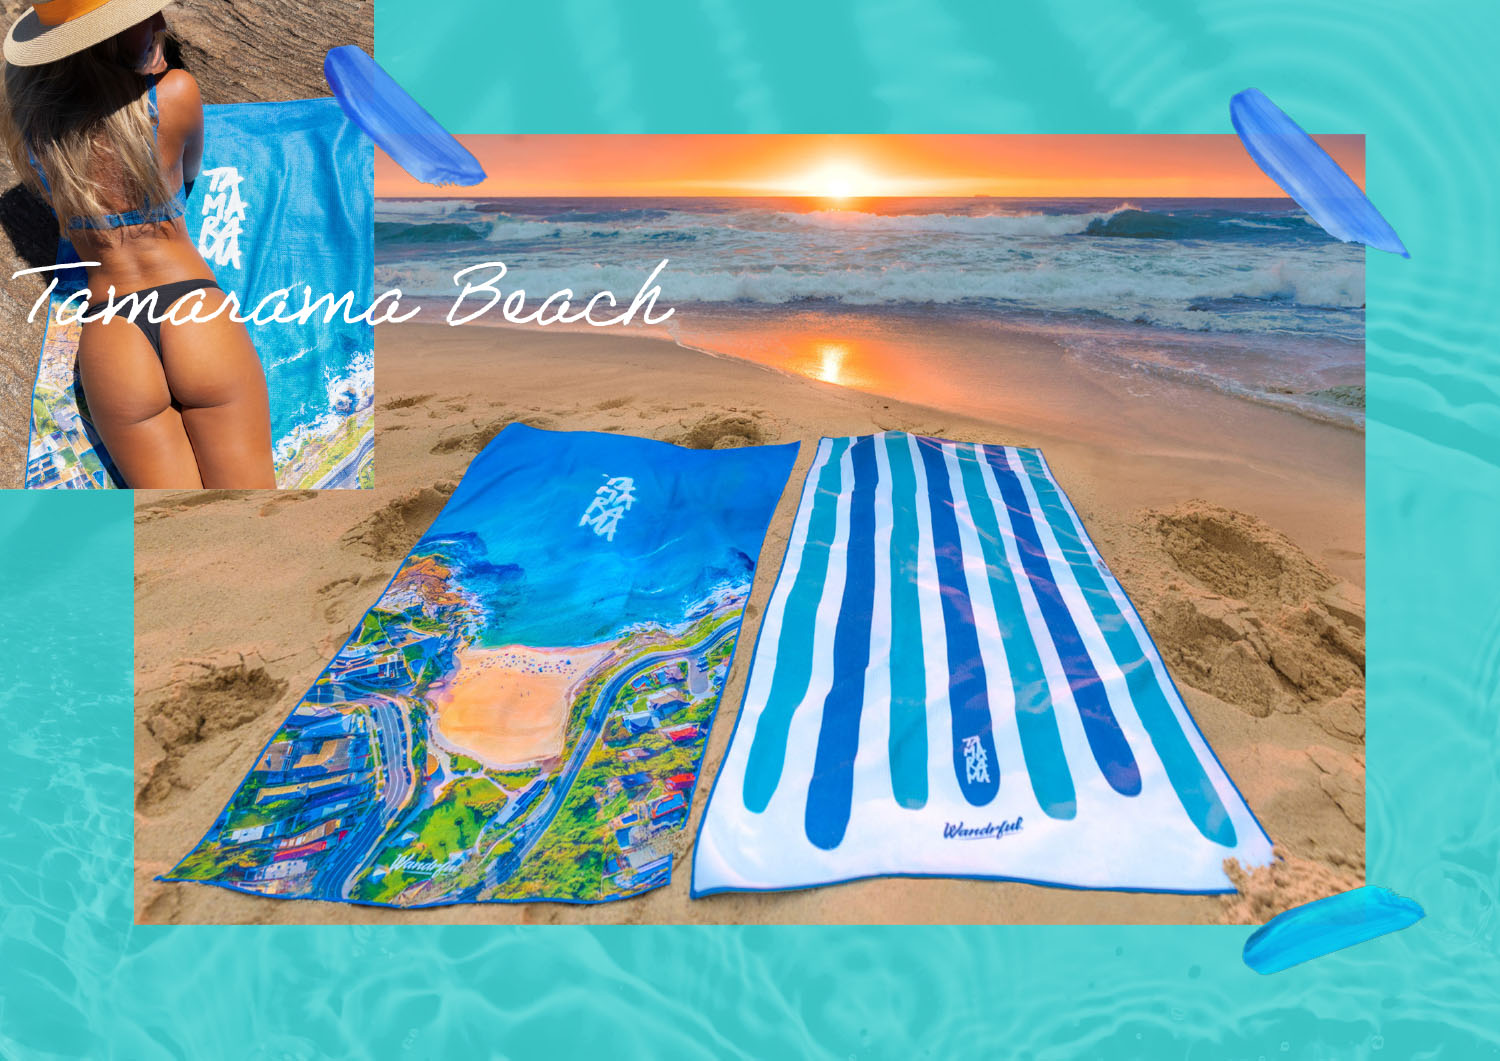 Wandrful sand-free beach towels at Tamarama Beach. Model using sand-free beach towel.